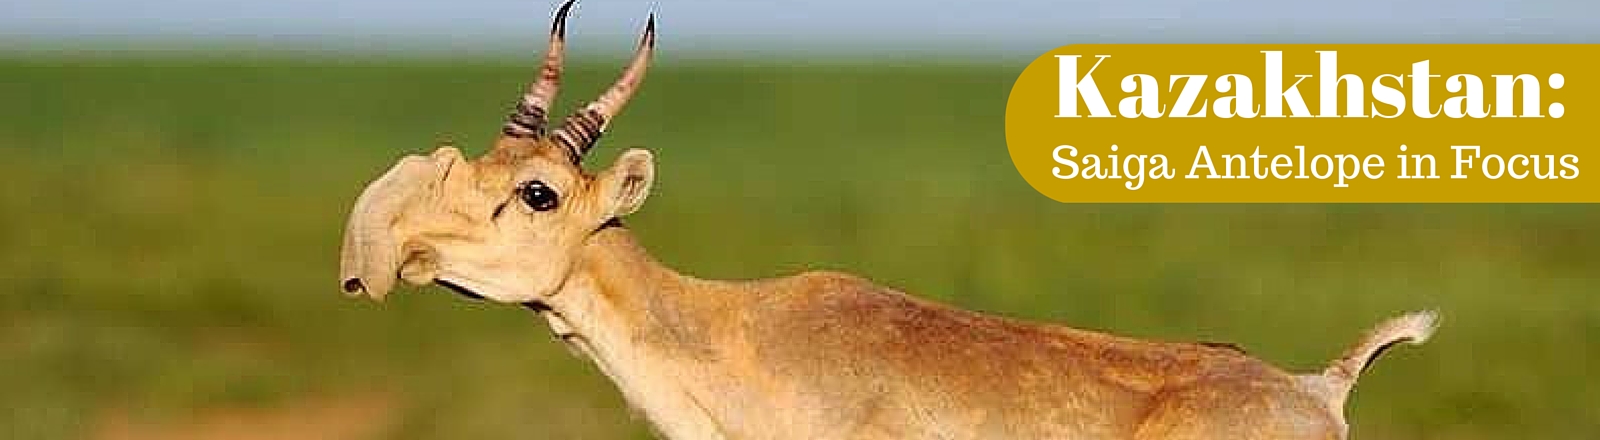 Kazakhstan Saiga Antelope suddenly die